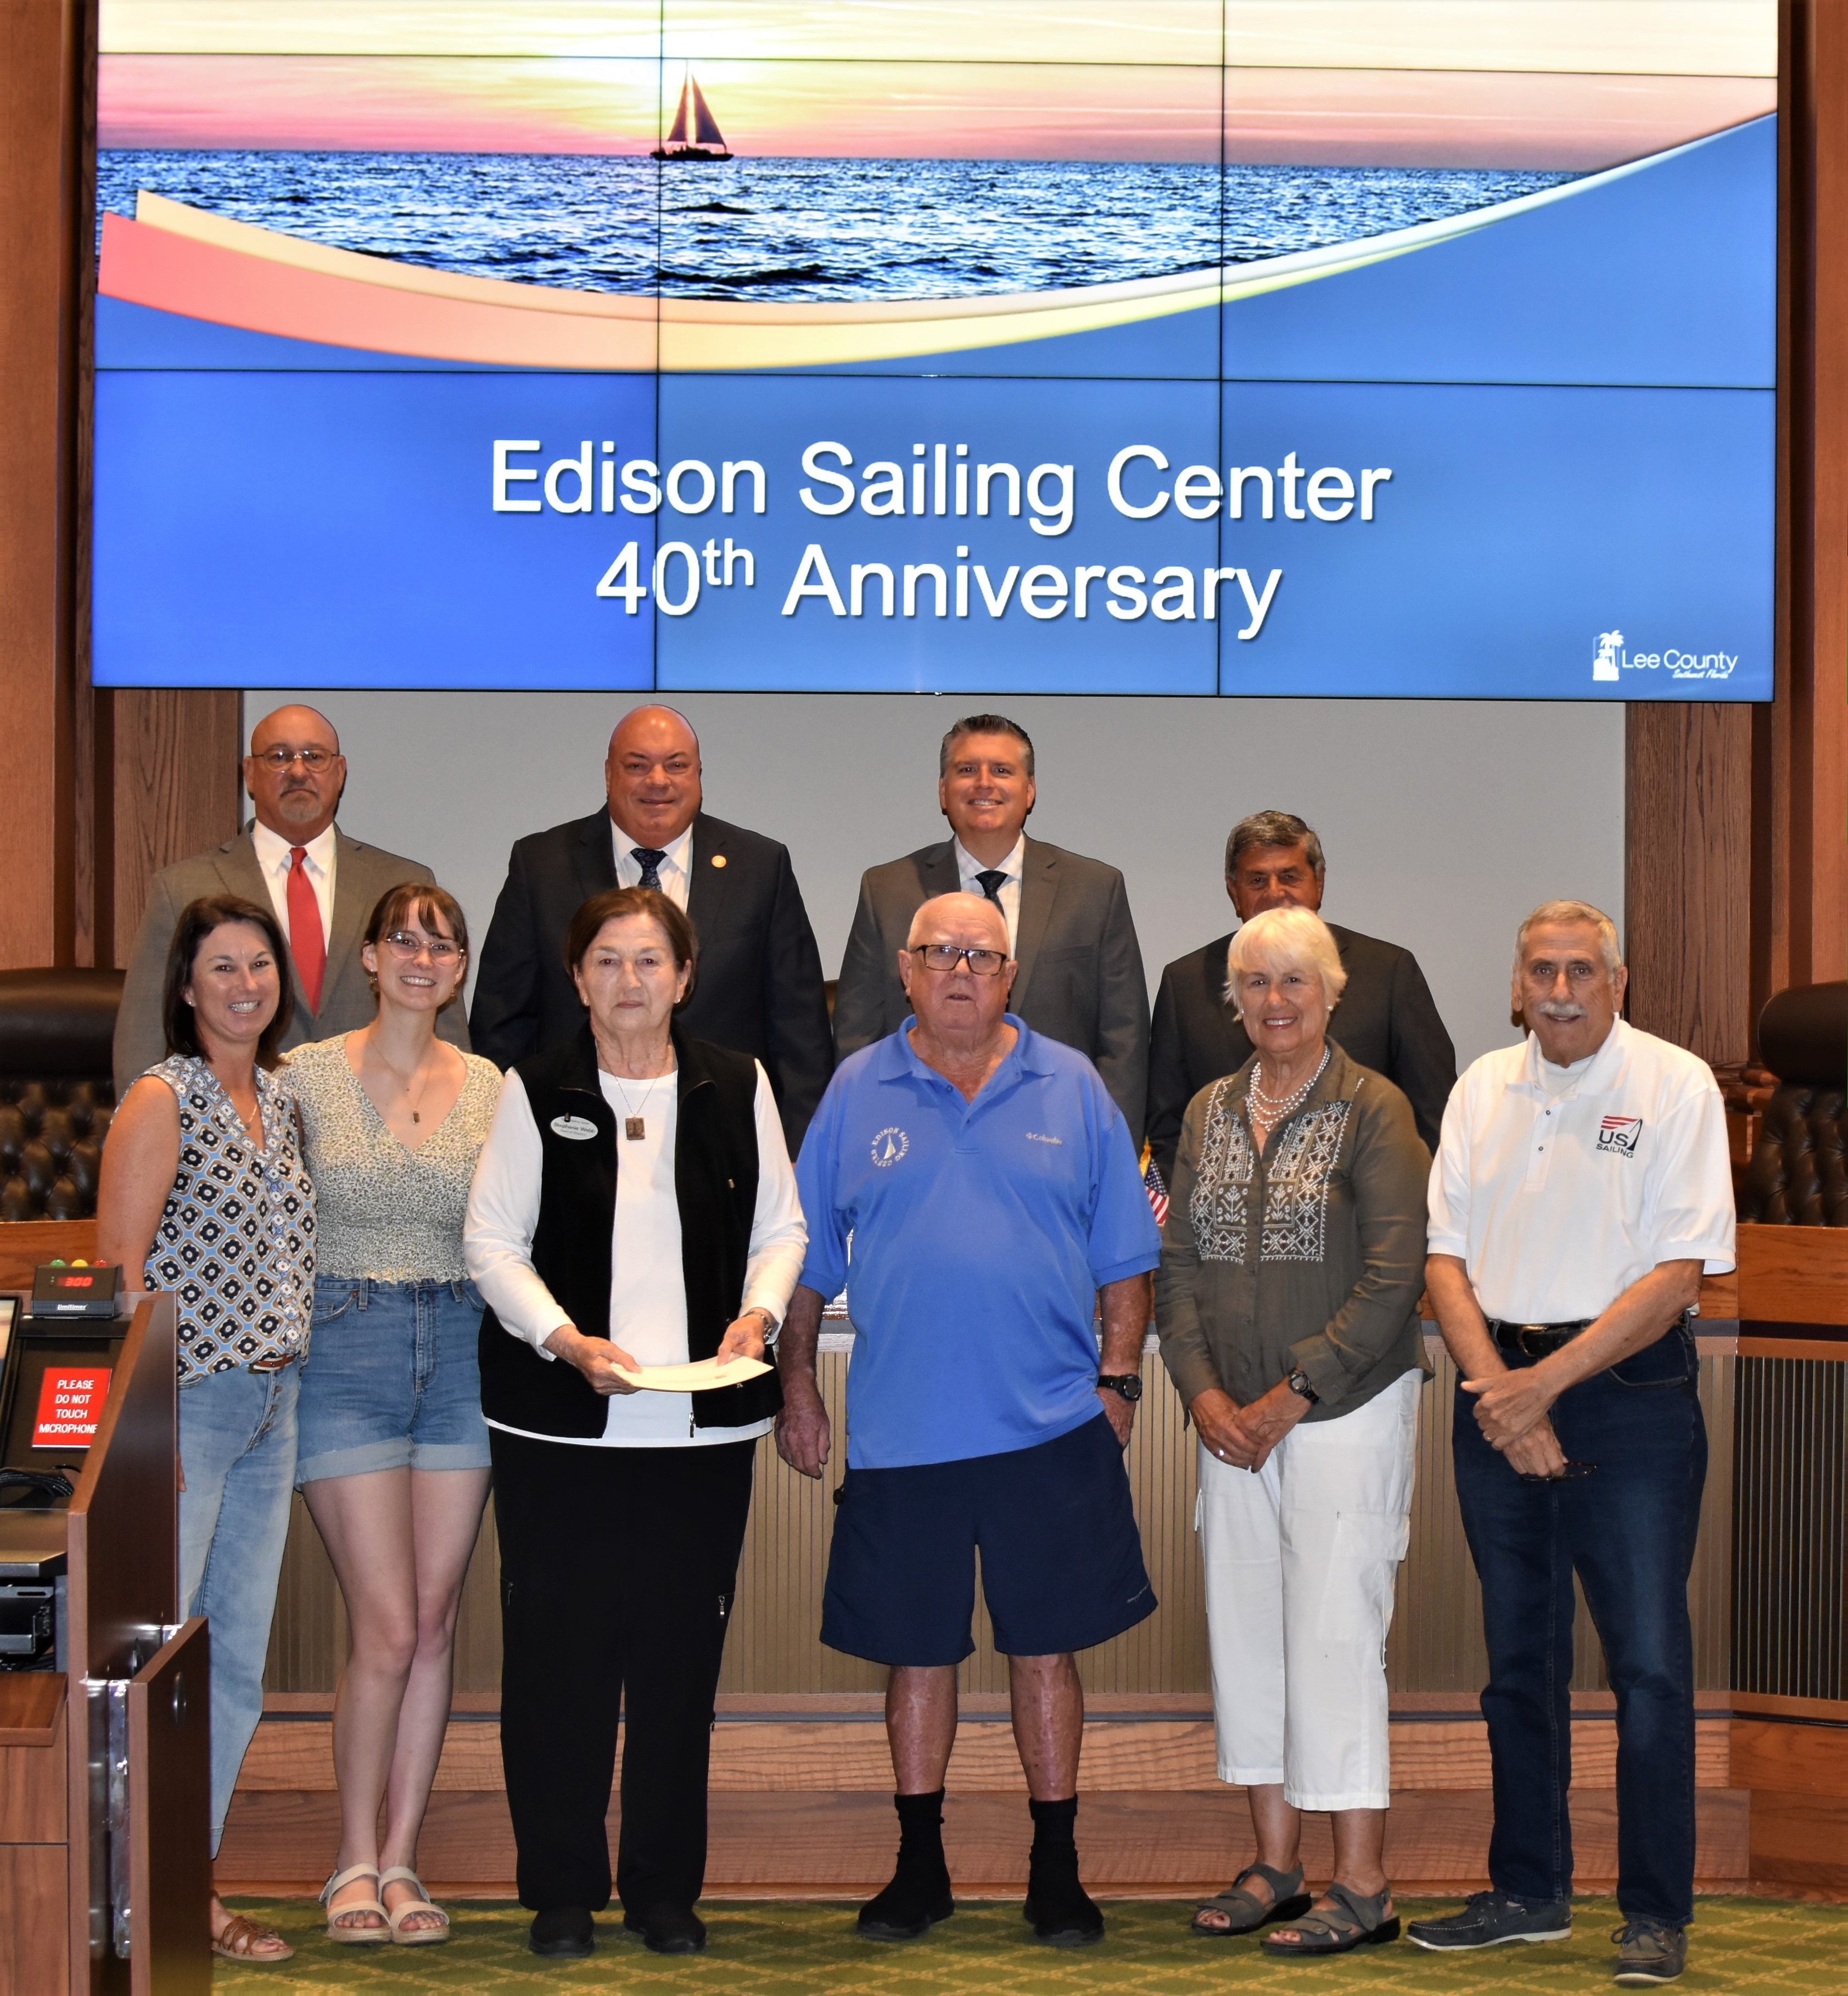 08-15-23 Edison Sailing Center 40th Anniversary